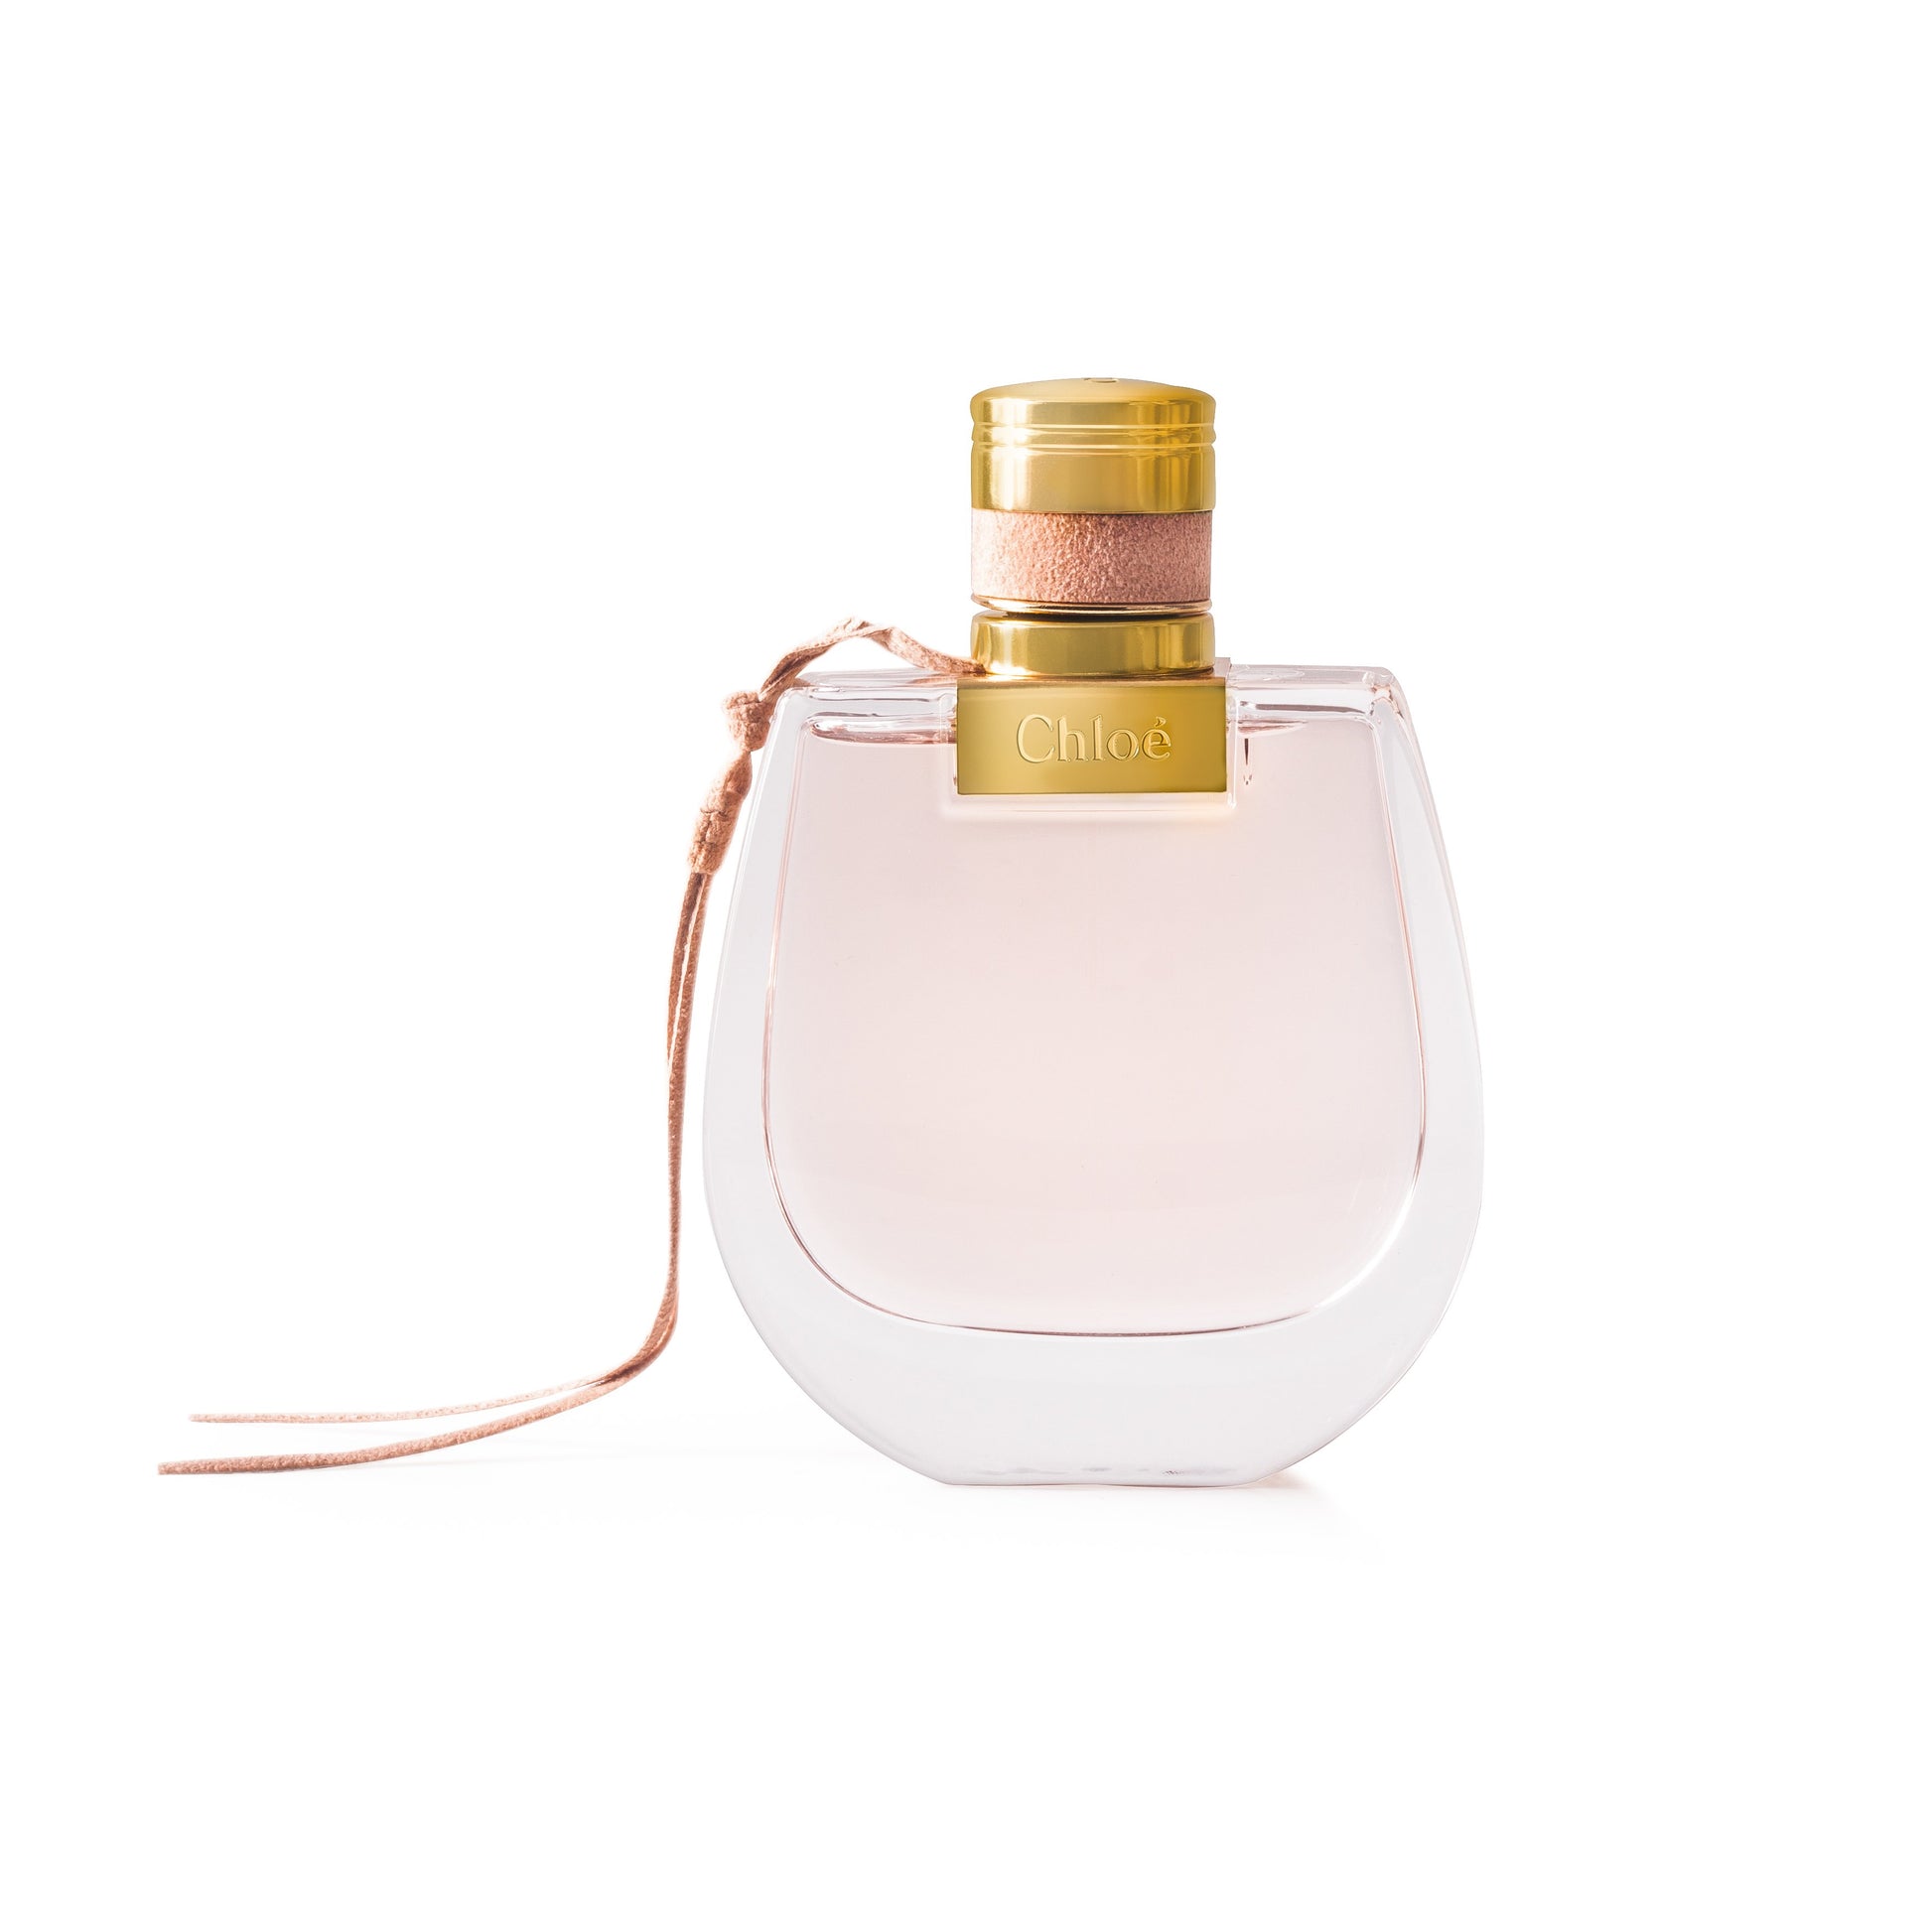 Outlet de – by Eau Fragrance for Nomade Parfum Spray Chloe Women